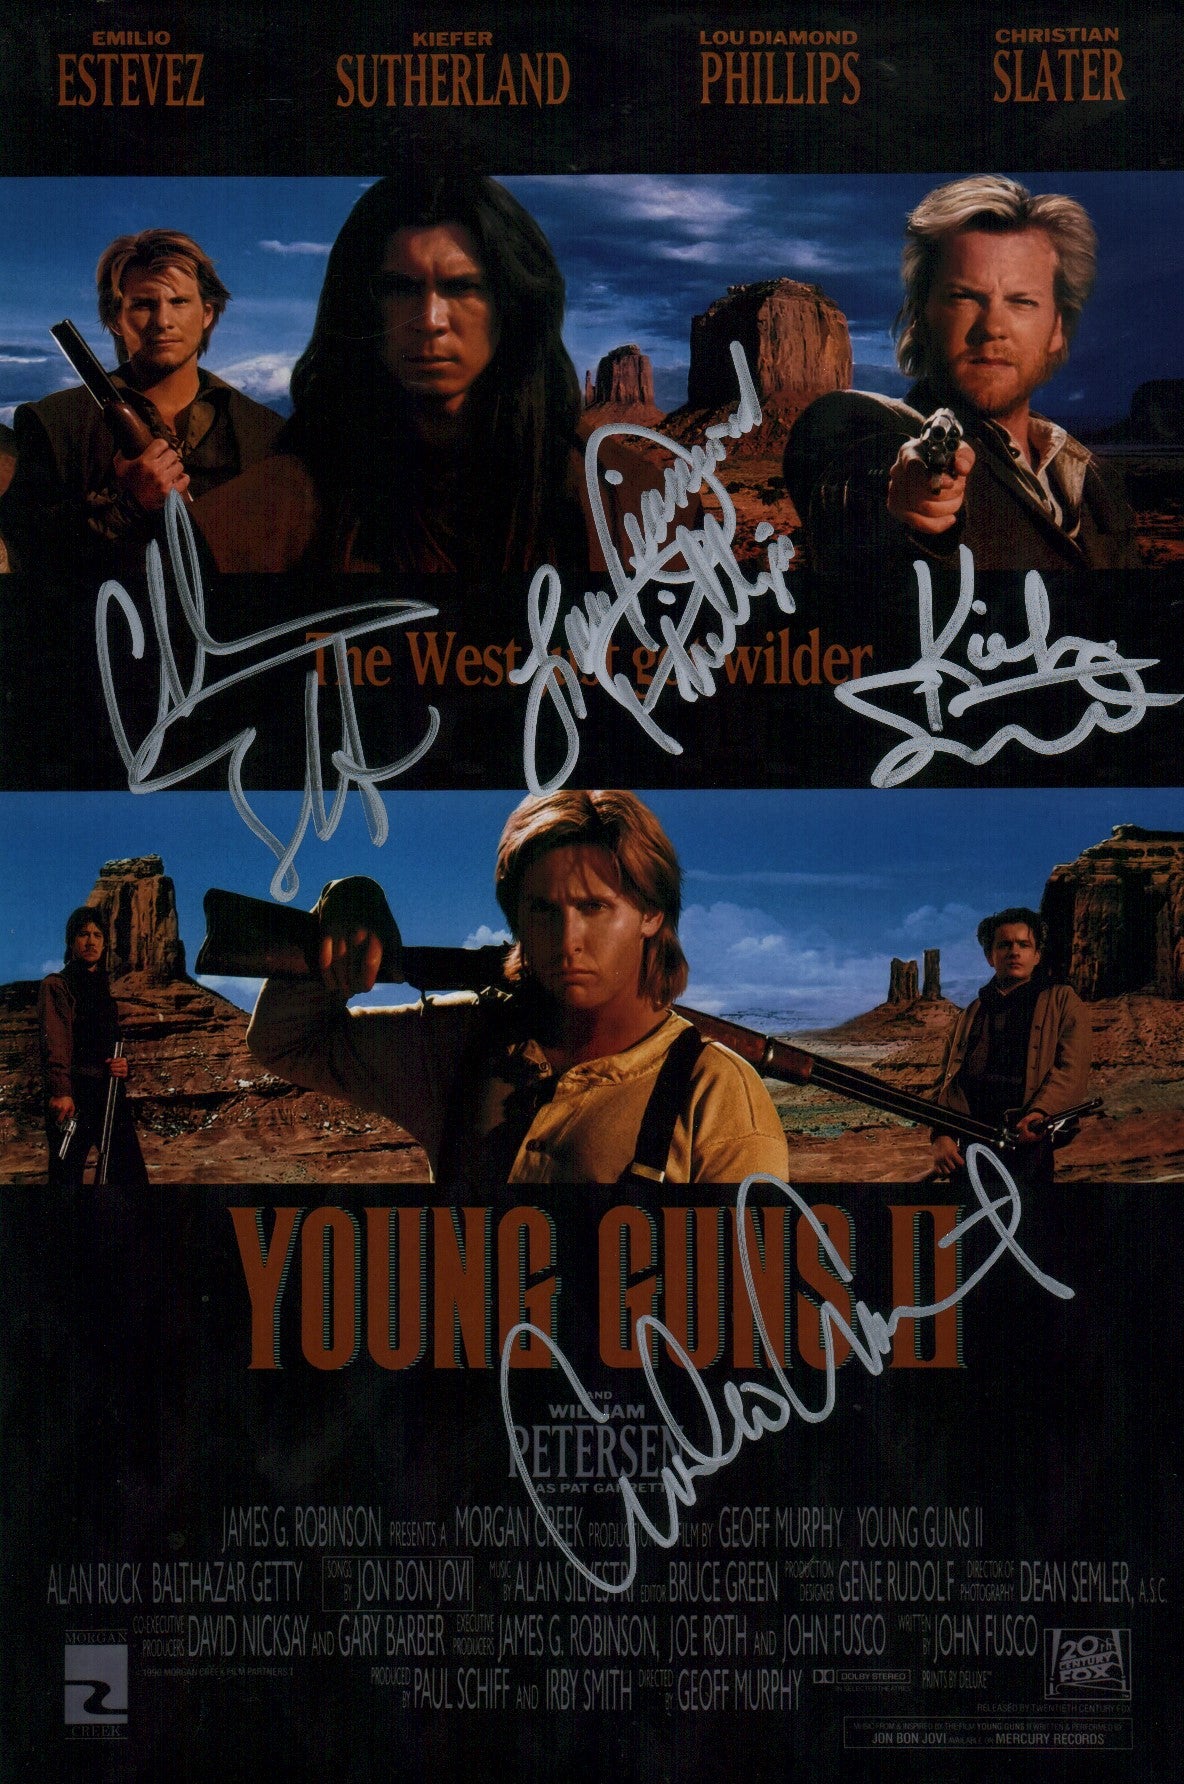 Young Guns ll 8x12 Photo Cast x4 Signed Estevez, Sutherland, Phillps, Slater JSA Certified Autograph